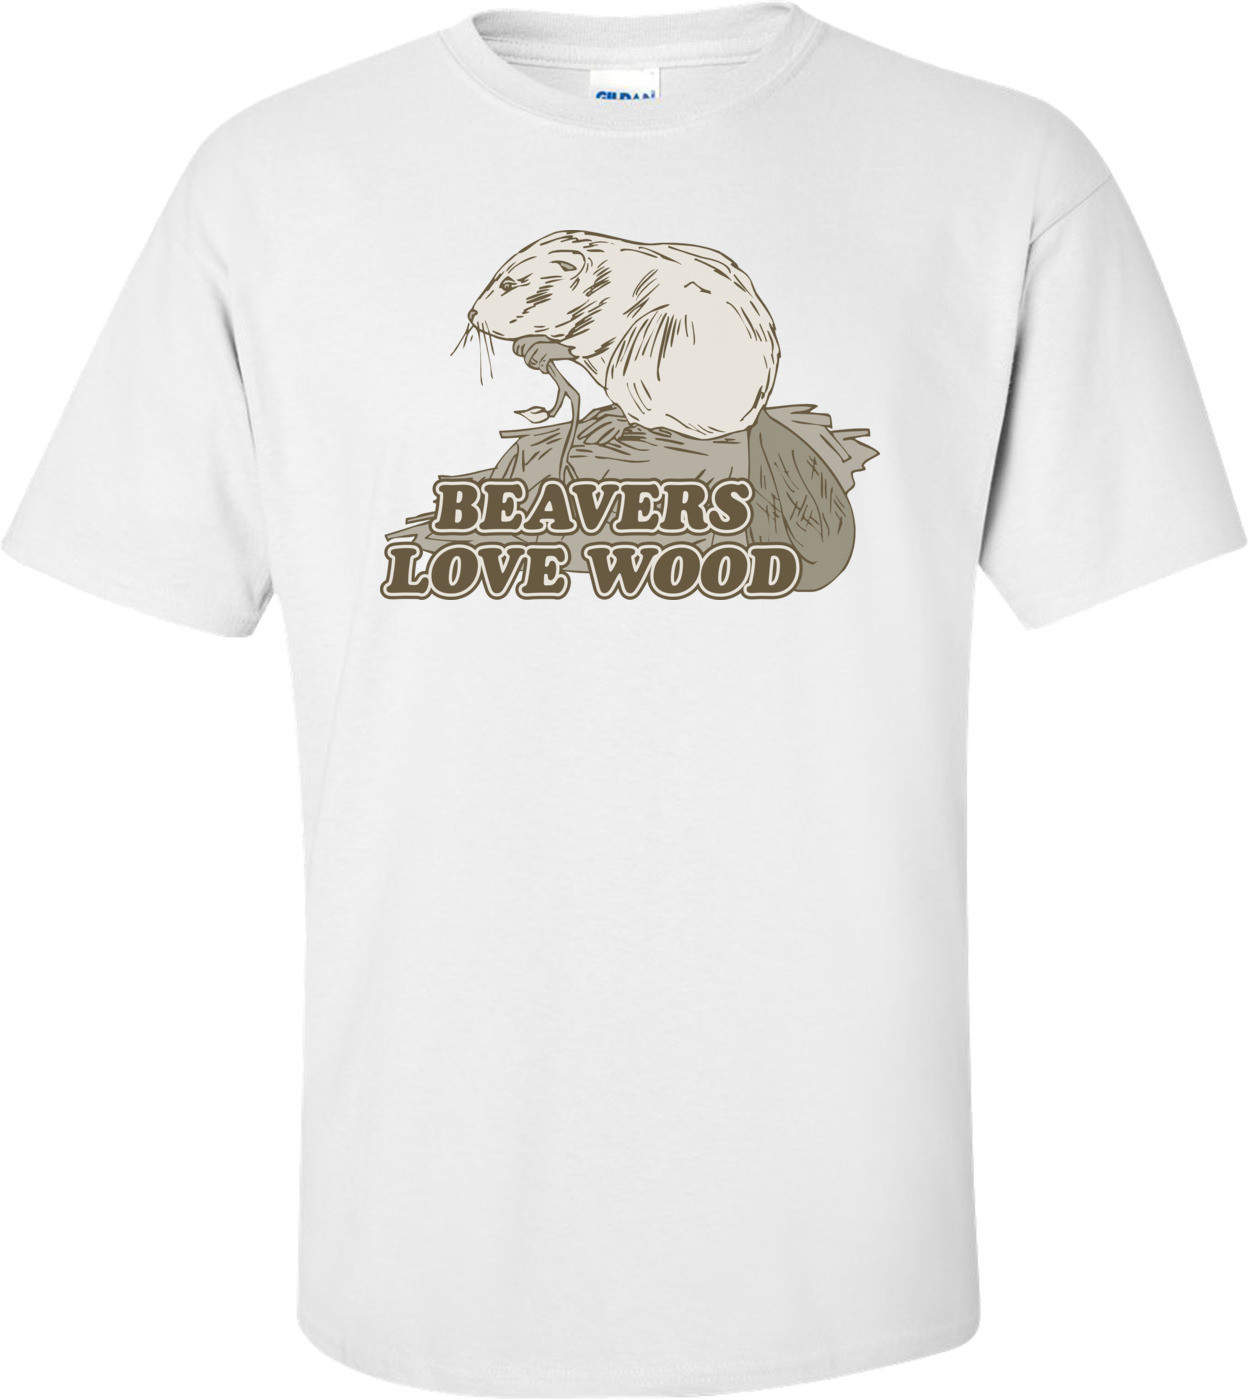 Beavers Love Wood T-shirt